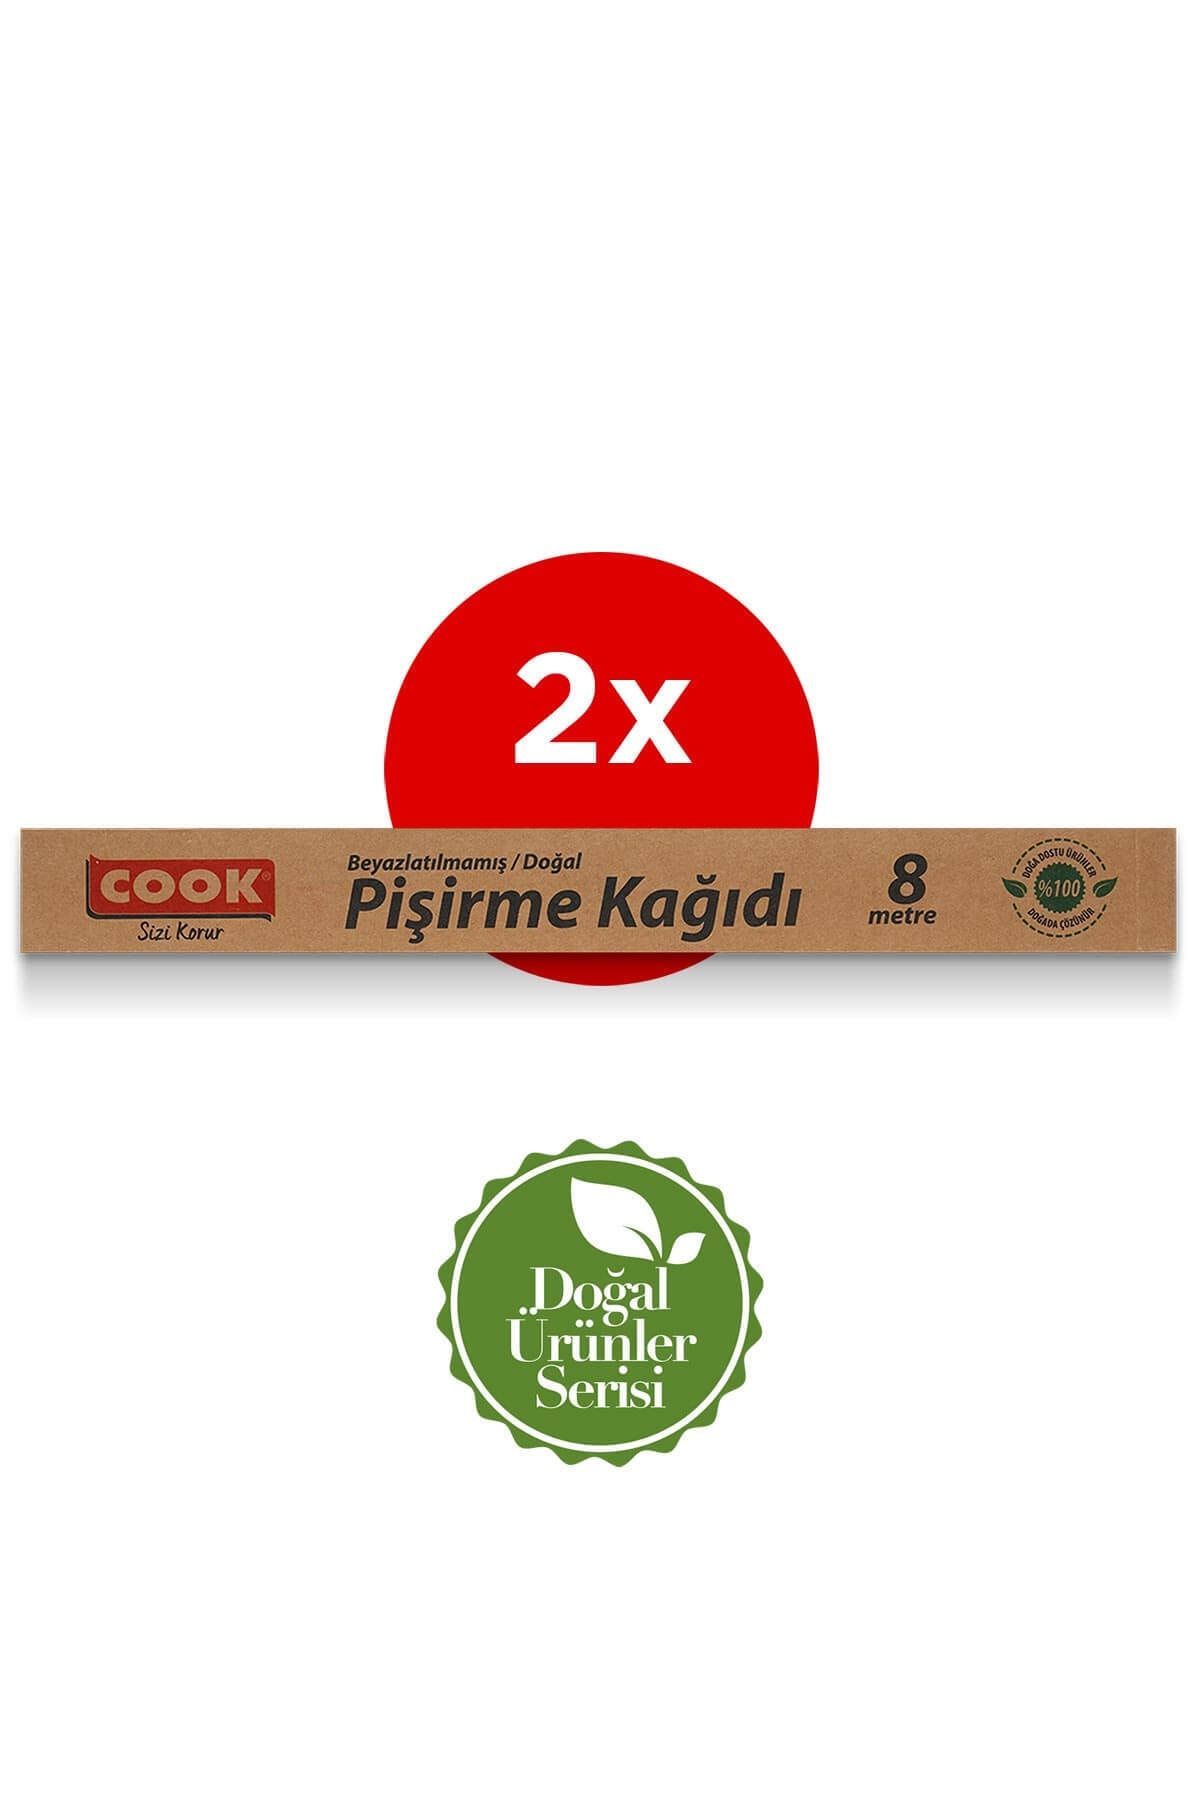 COOK Doğal Pişirme Kağıdı 37 CM x 8 M 2'li Paket